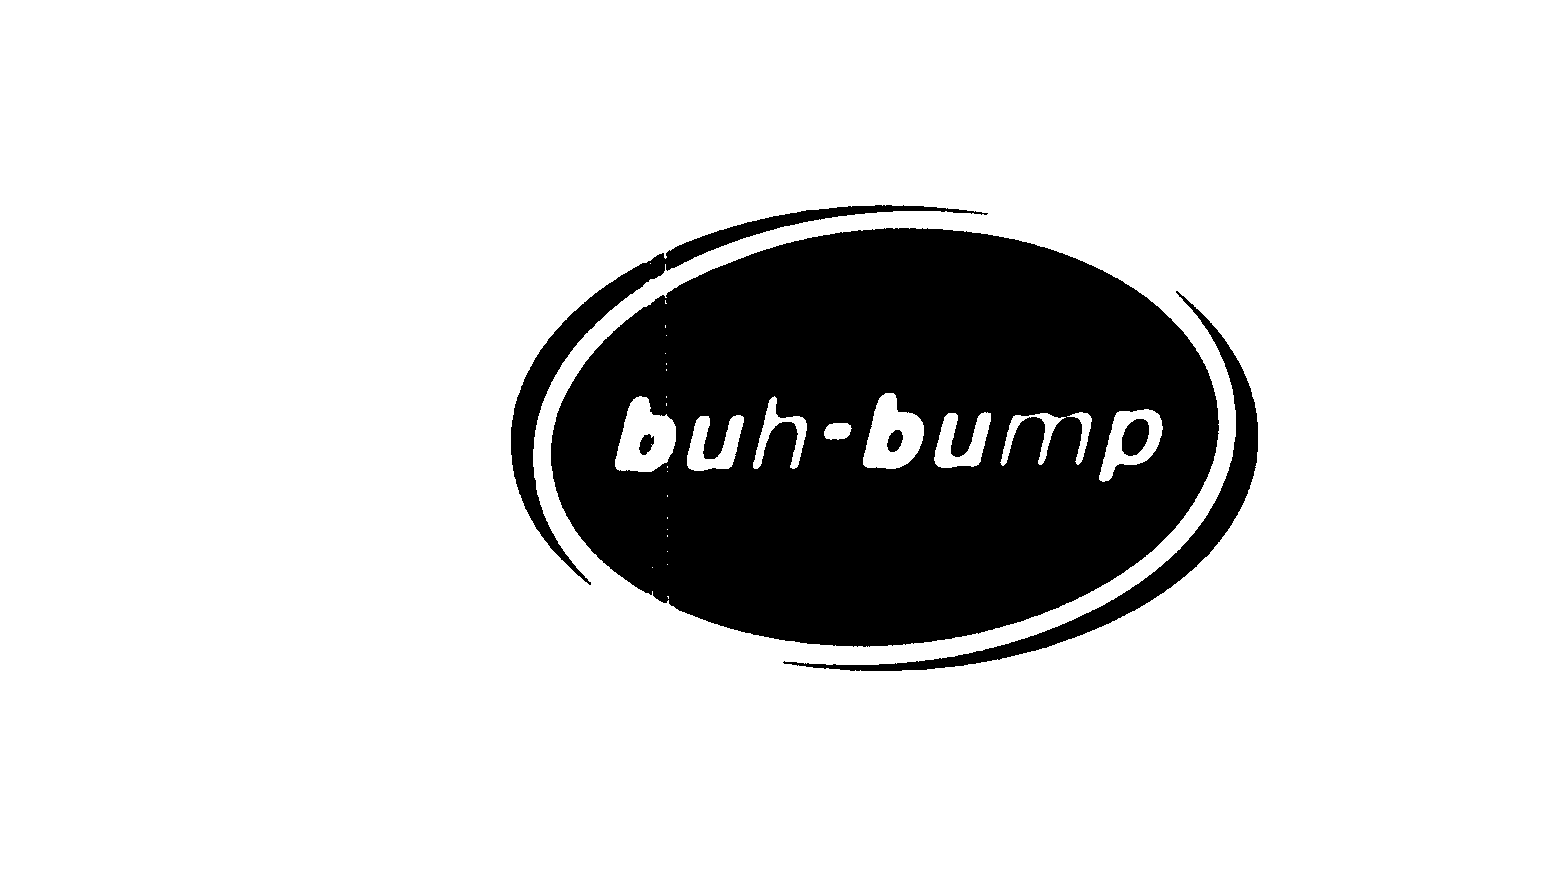  BUH-BUMP